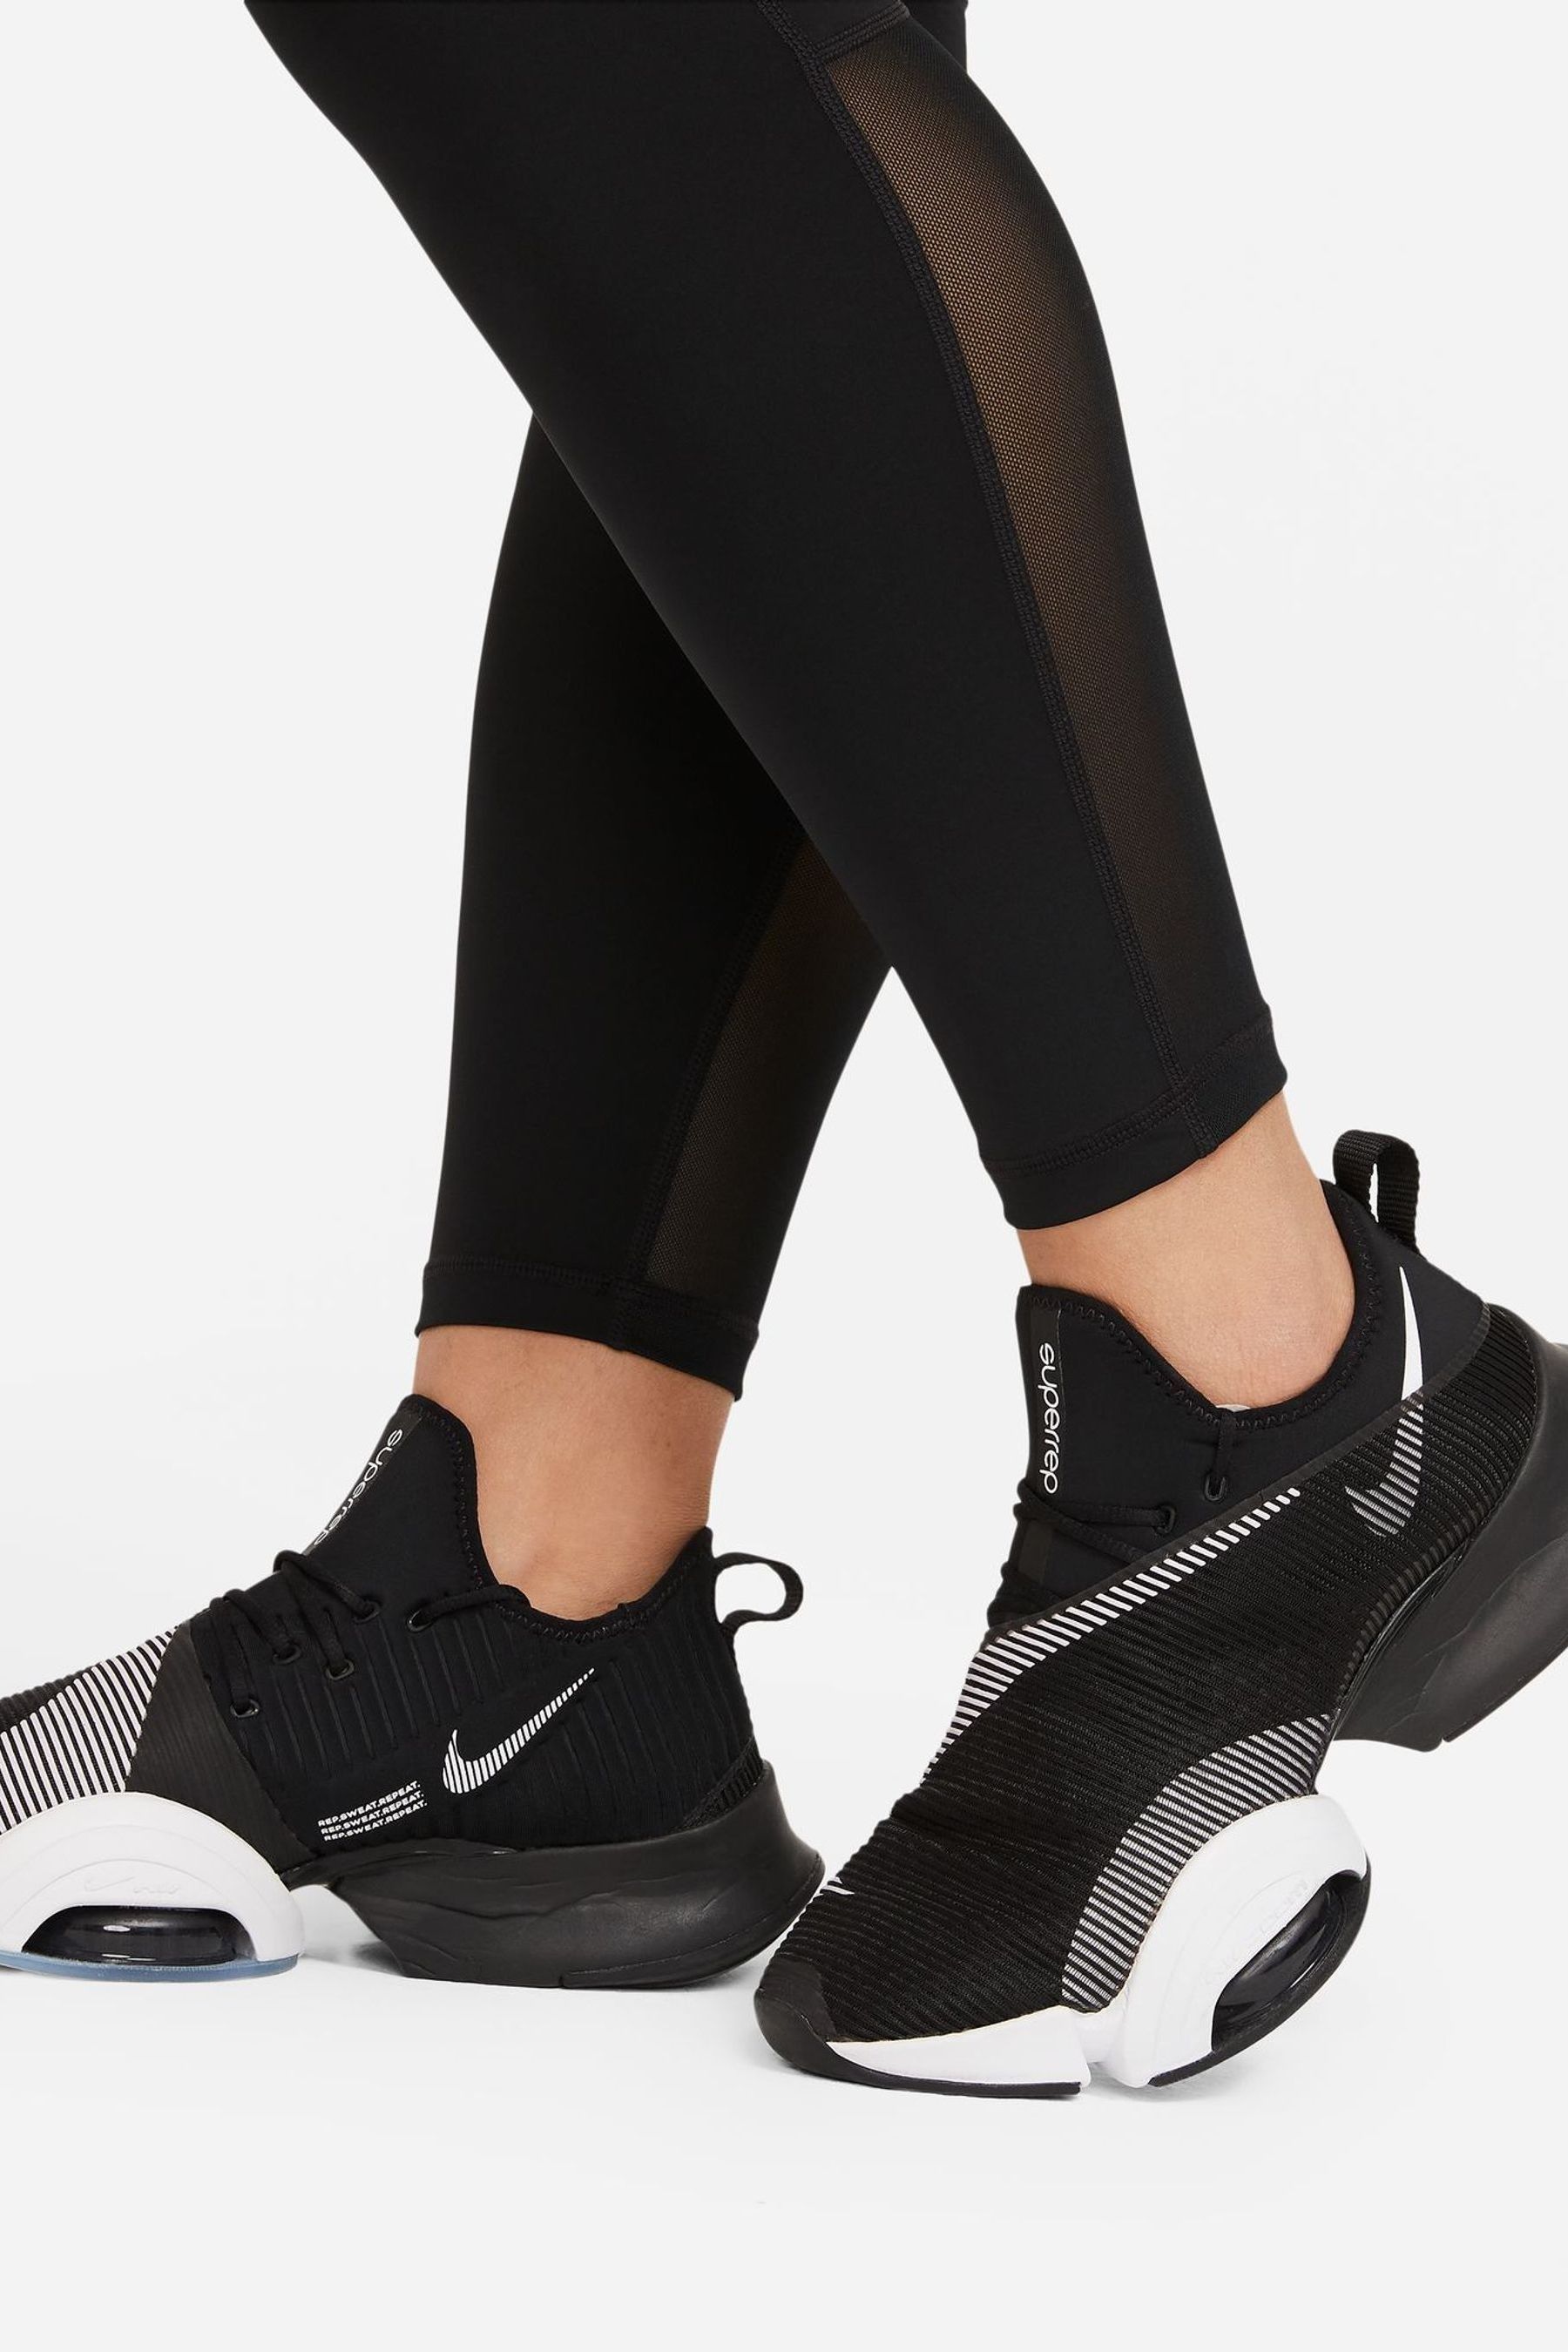 Buy Nike Black Curve Pro 365 Leggings from the Next UK online shop